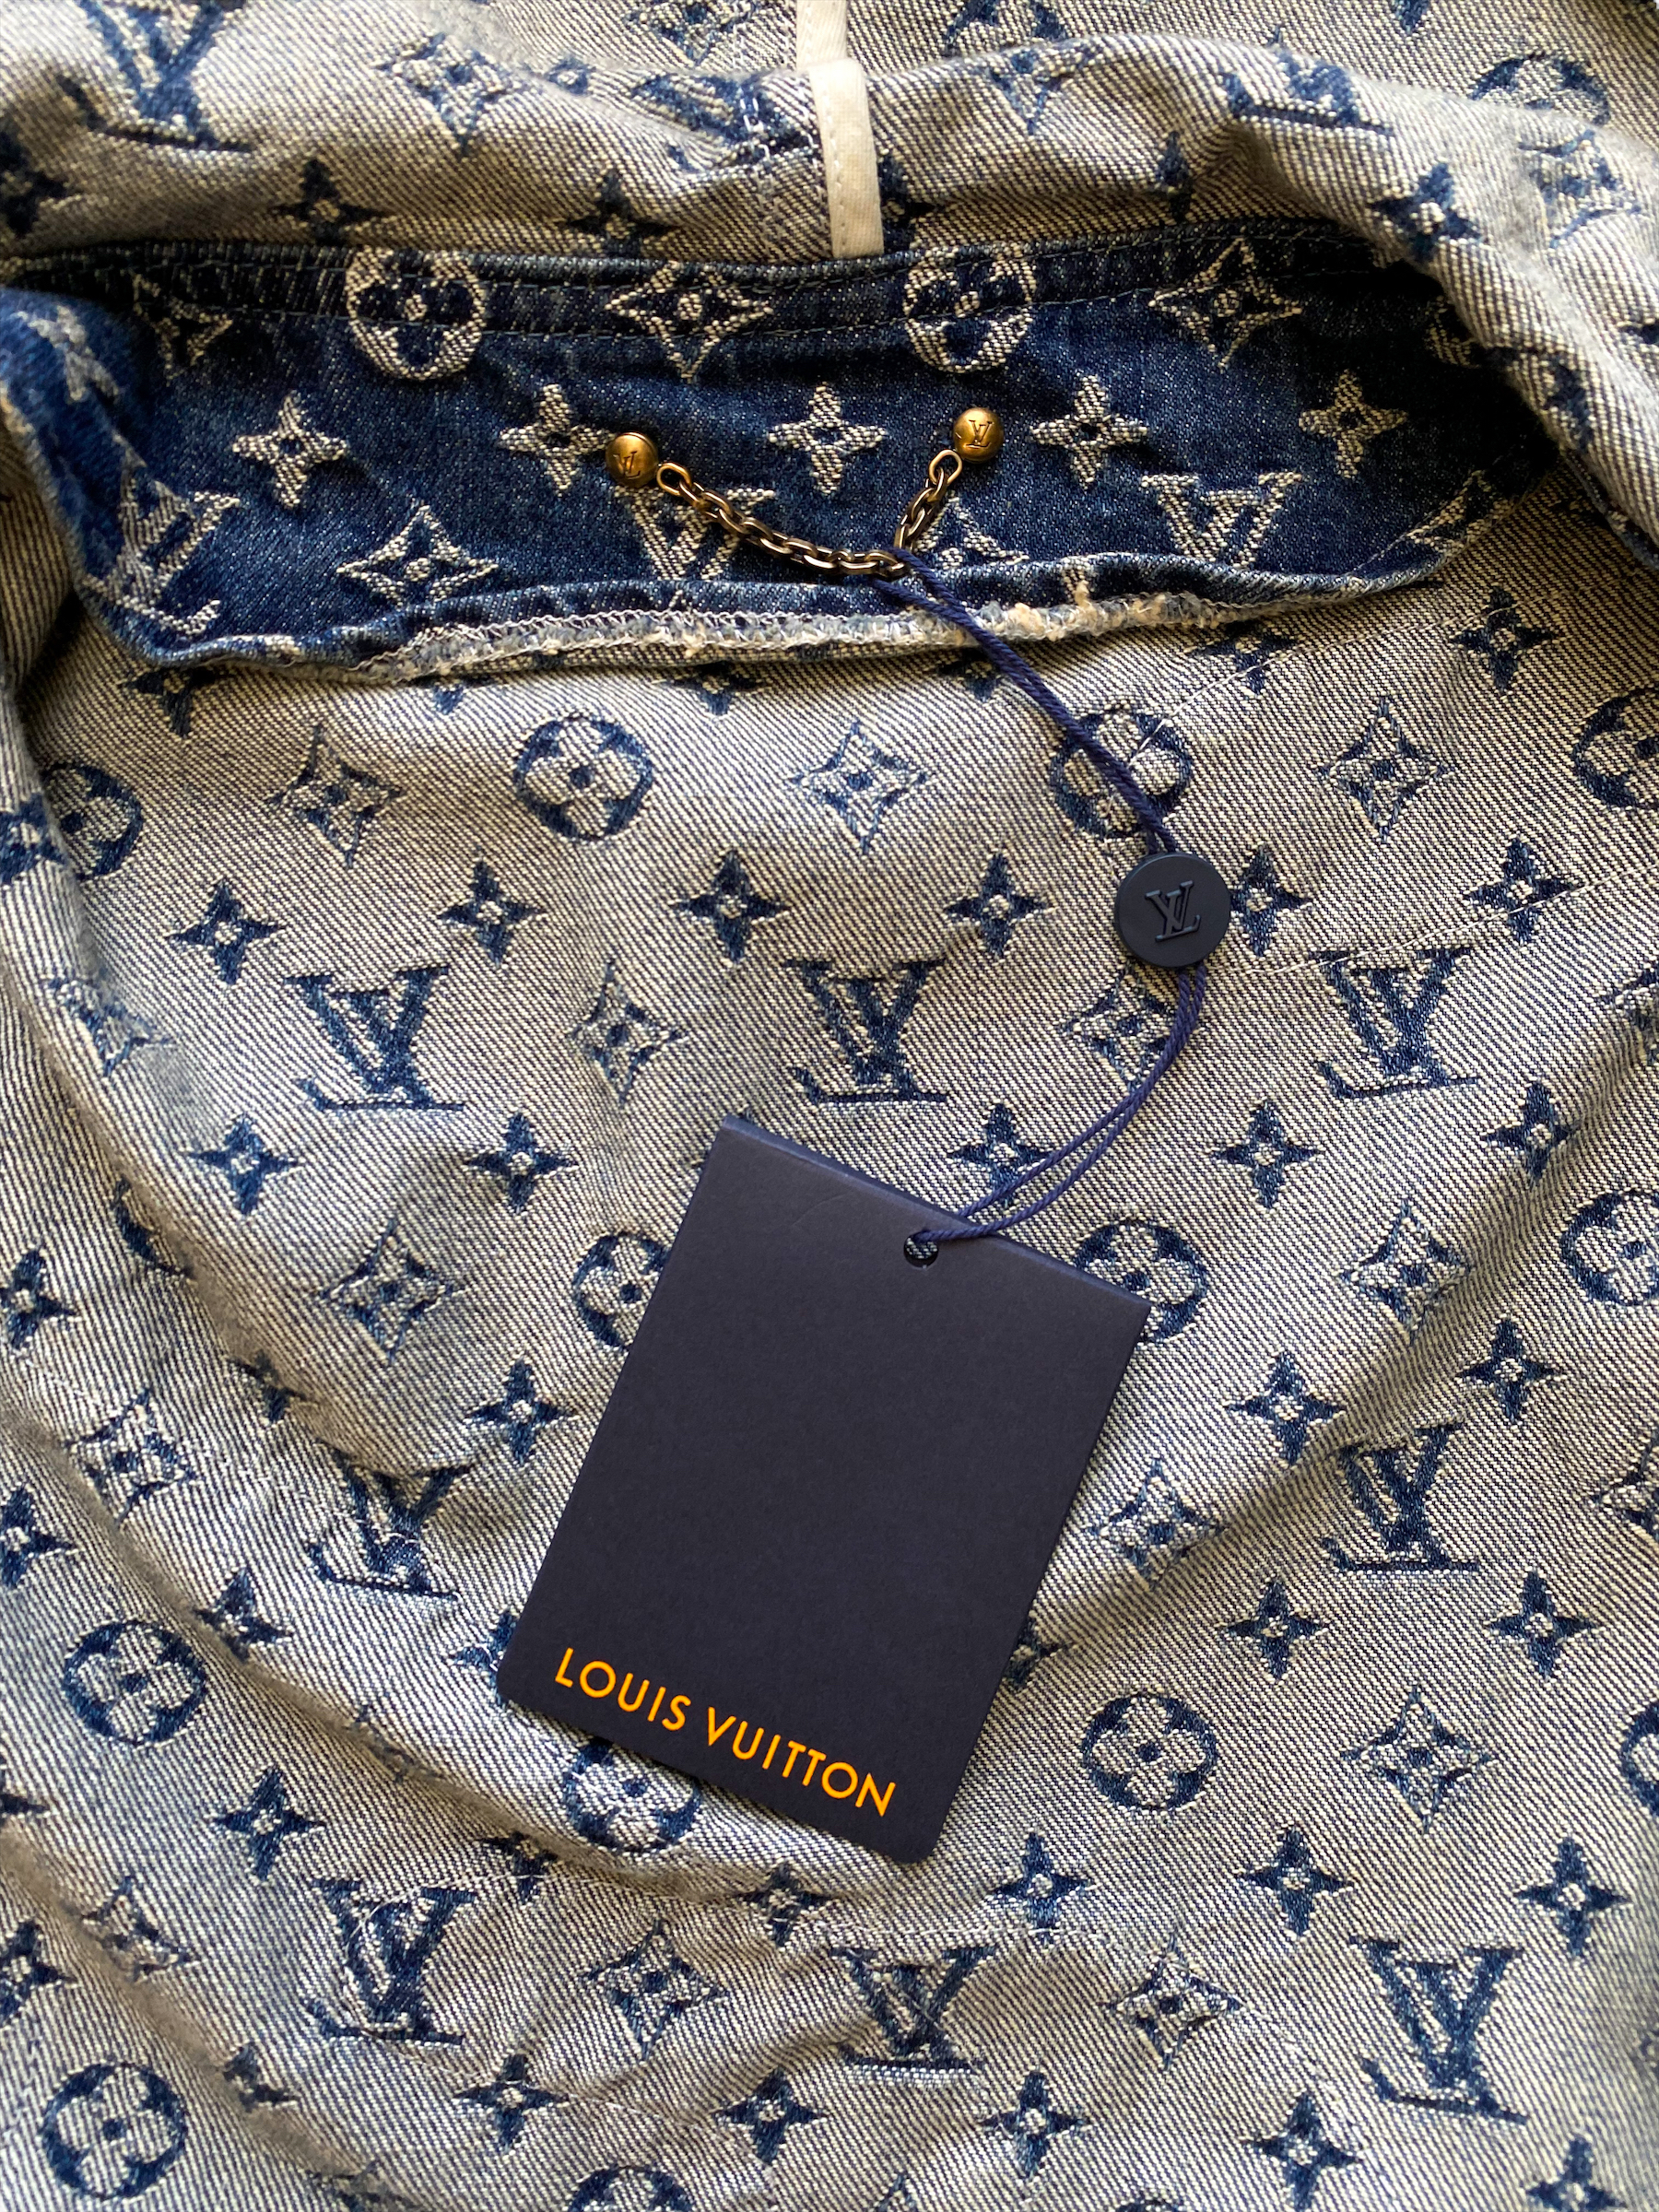 Louis Vuitton x NIGO “LV2” Denim Jacket (2021)